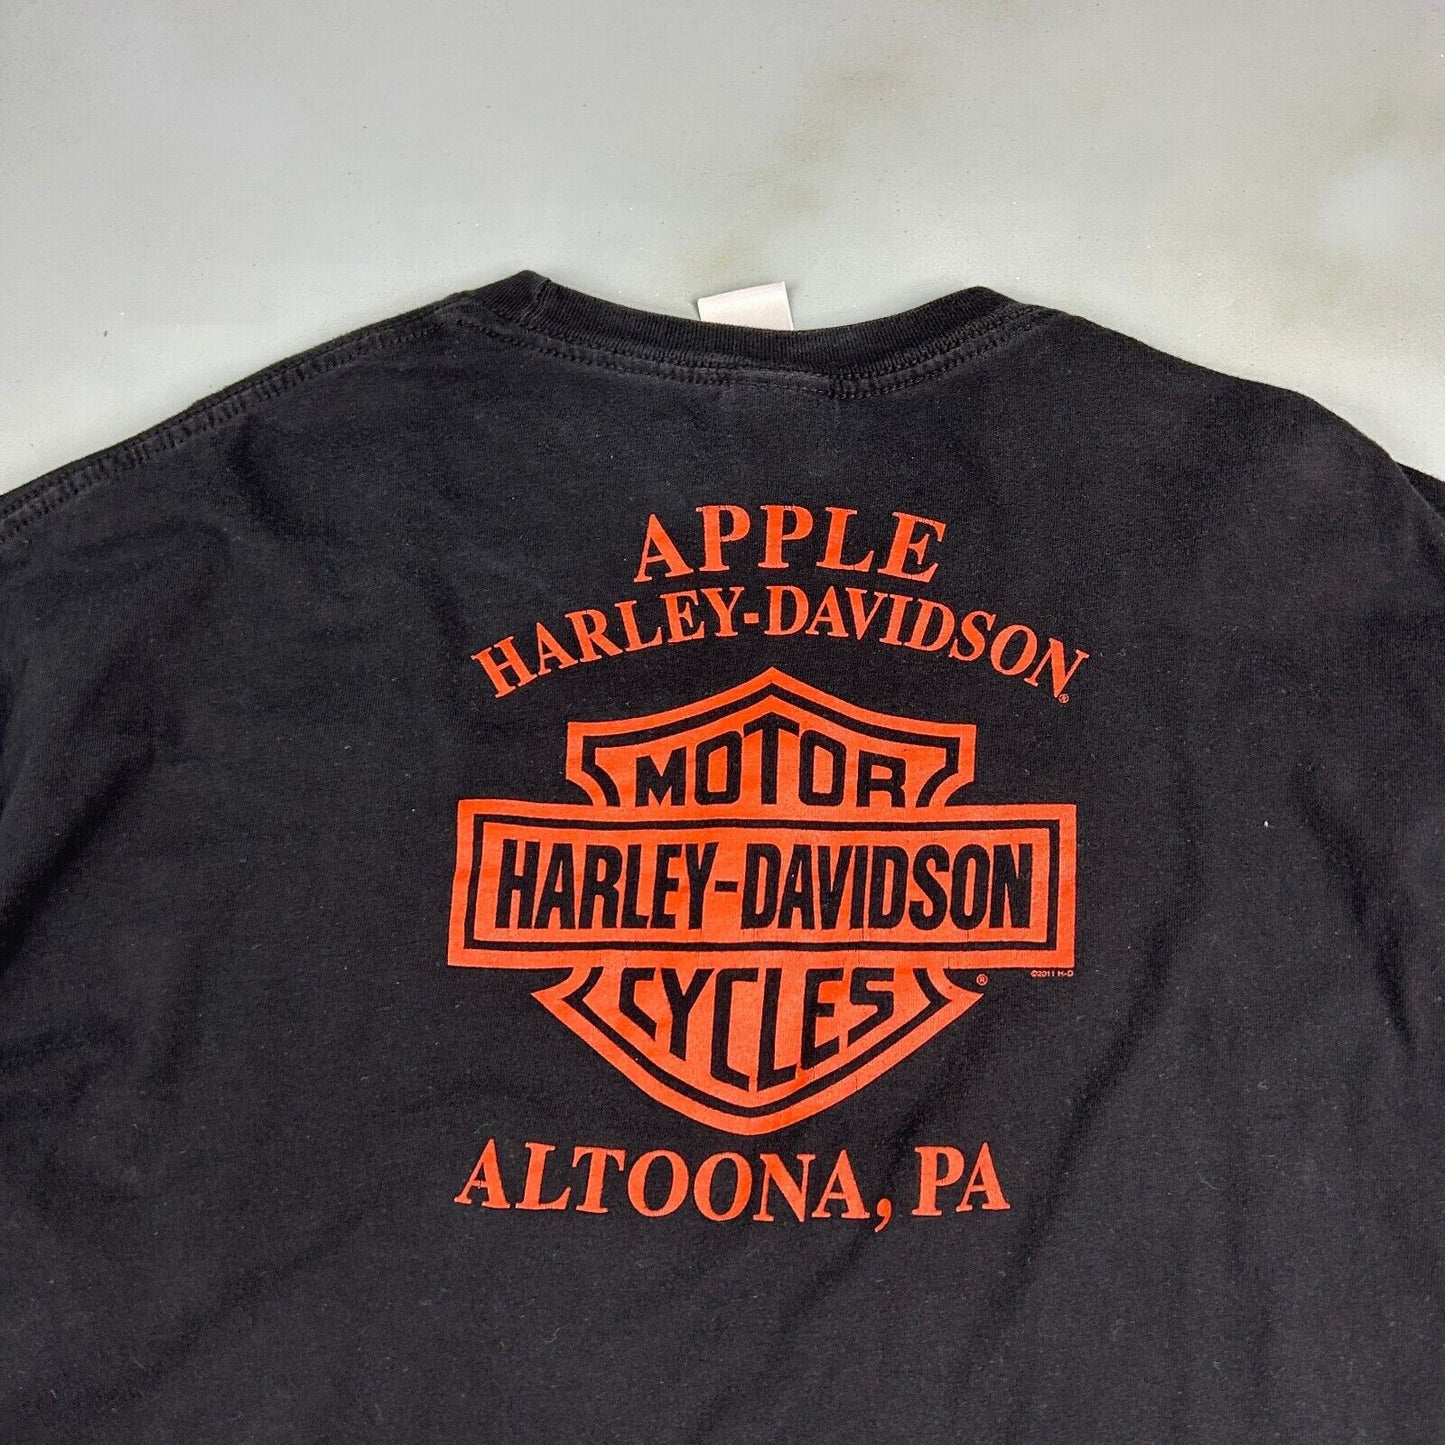 HARLEY DAVIDSON Motor Cycles My Way Is The Highway PA Biker T-Shirt sz 3XL Adult